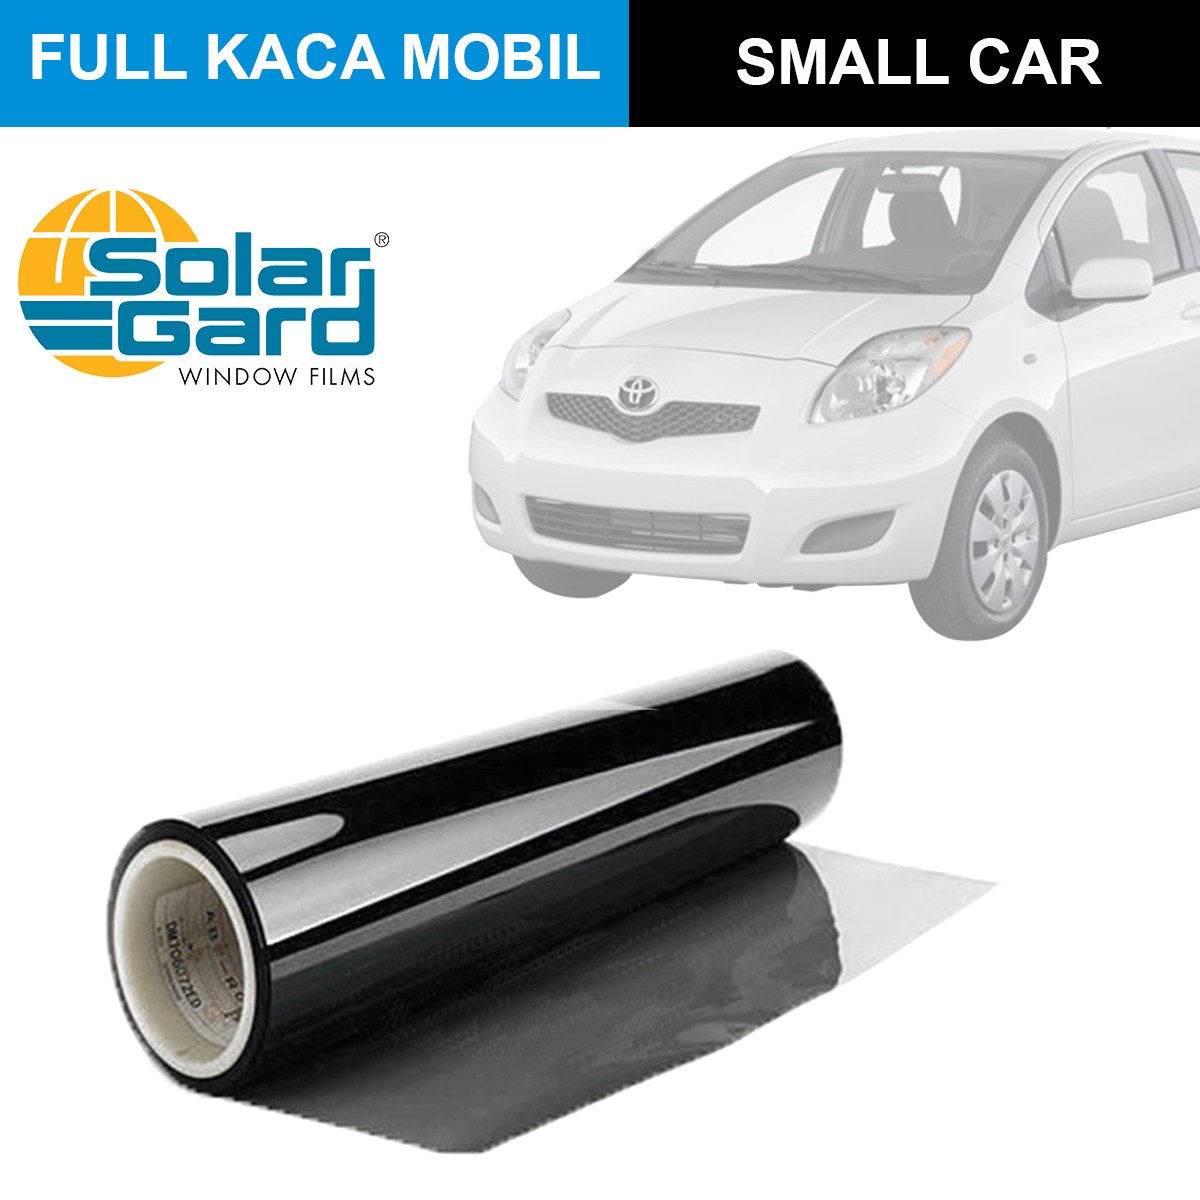 KACA FILM SOLAR GARD PLATINUM PERFORMANCE - (SMALL CAR) FULL KACA